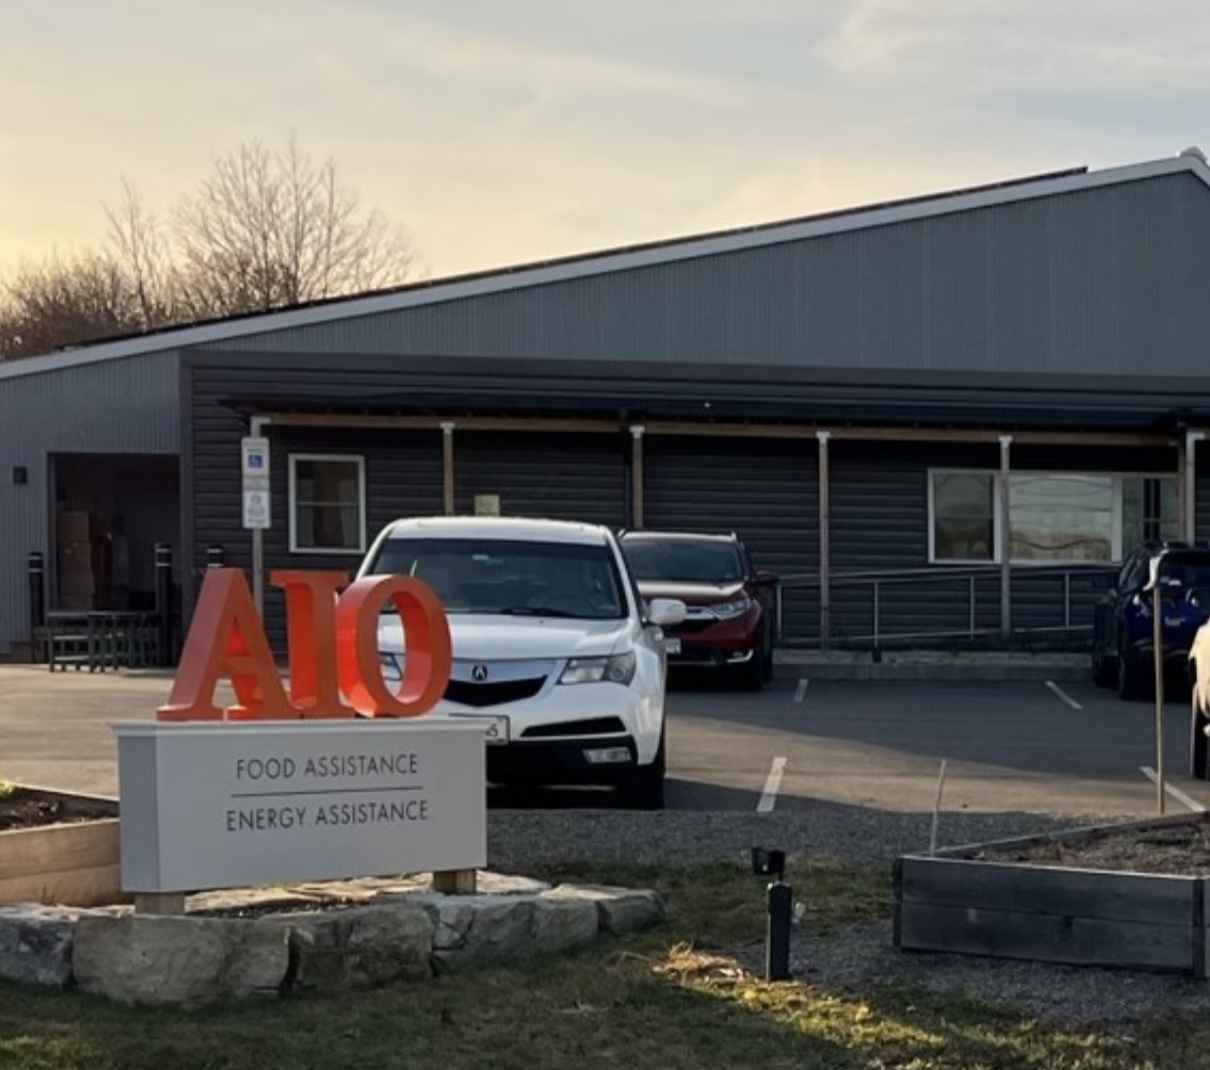 AIO Facility in Rockland, Maine.